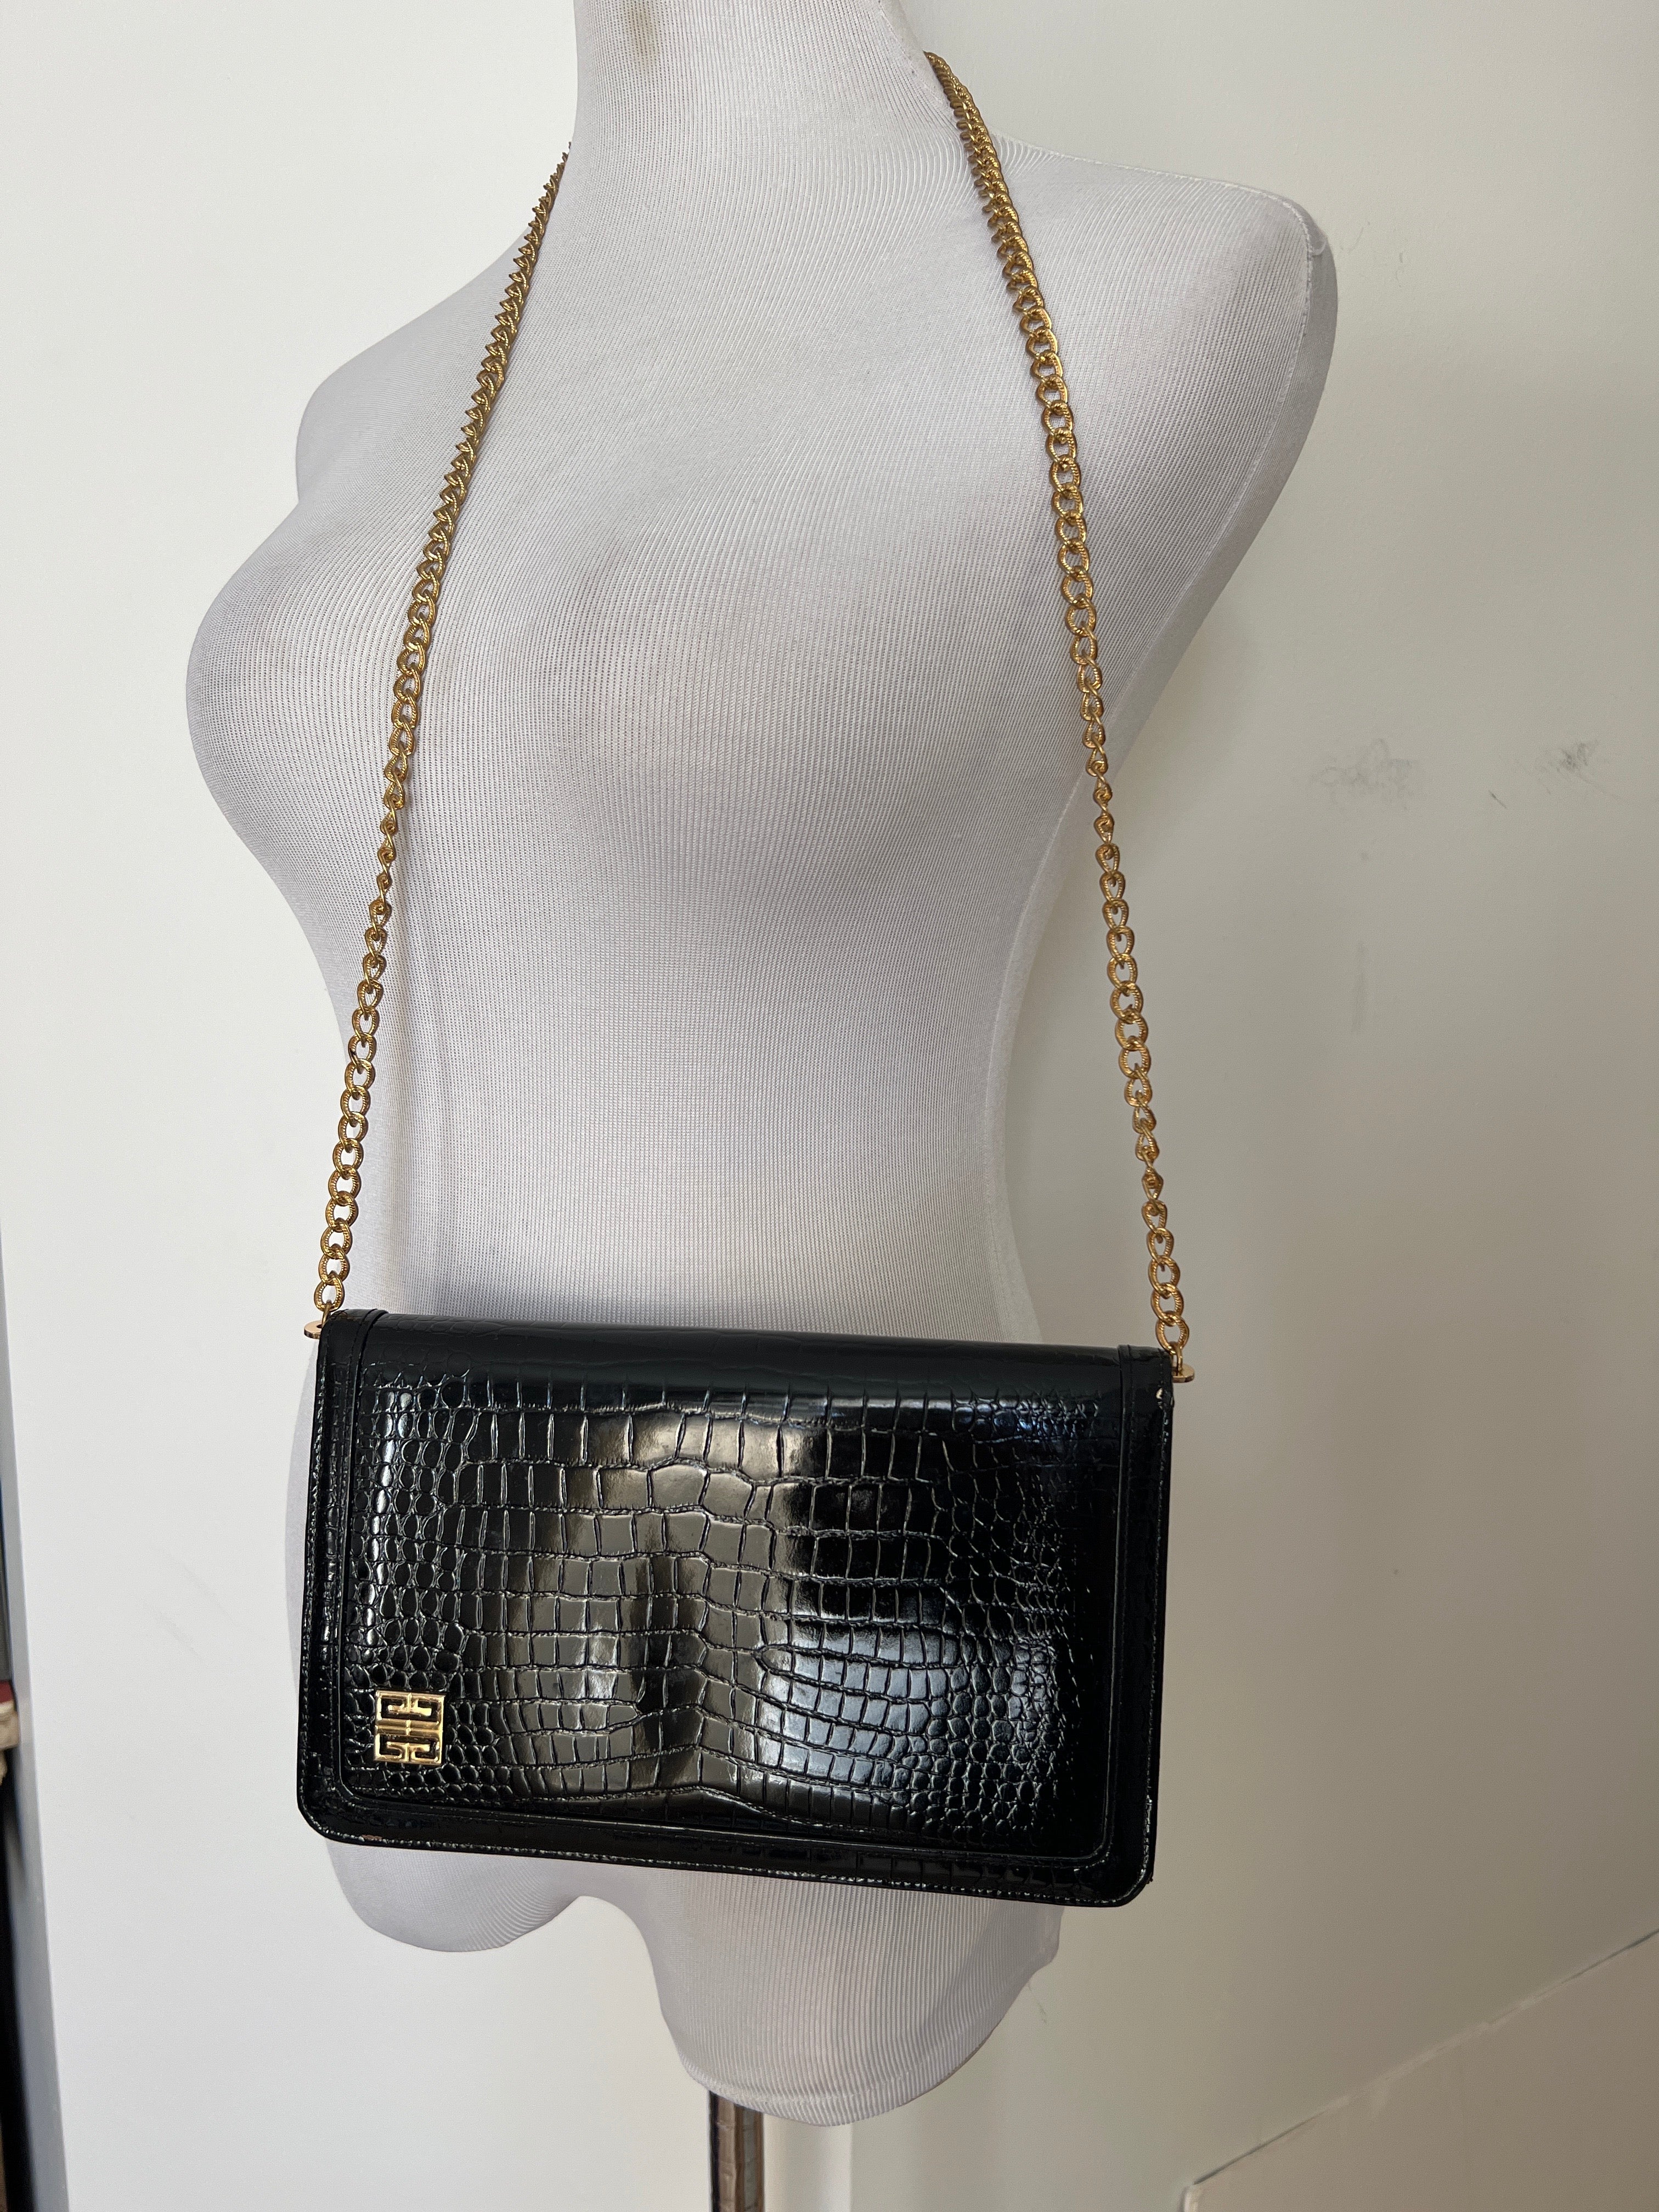 Vintage Macy's Black Alligator Leather Handbag Auction